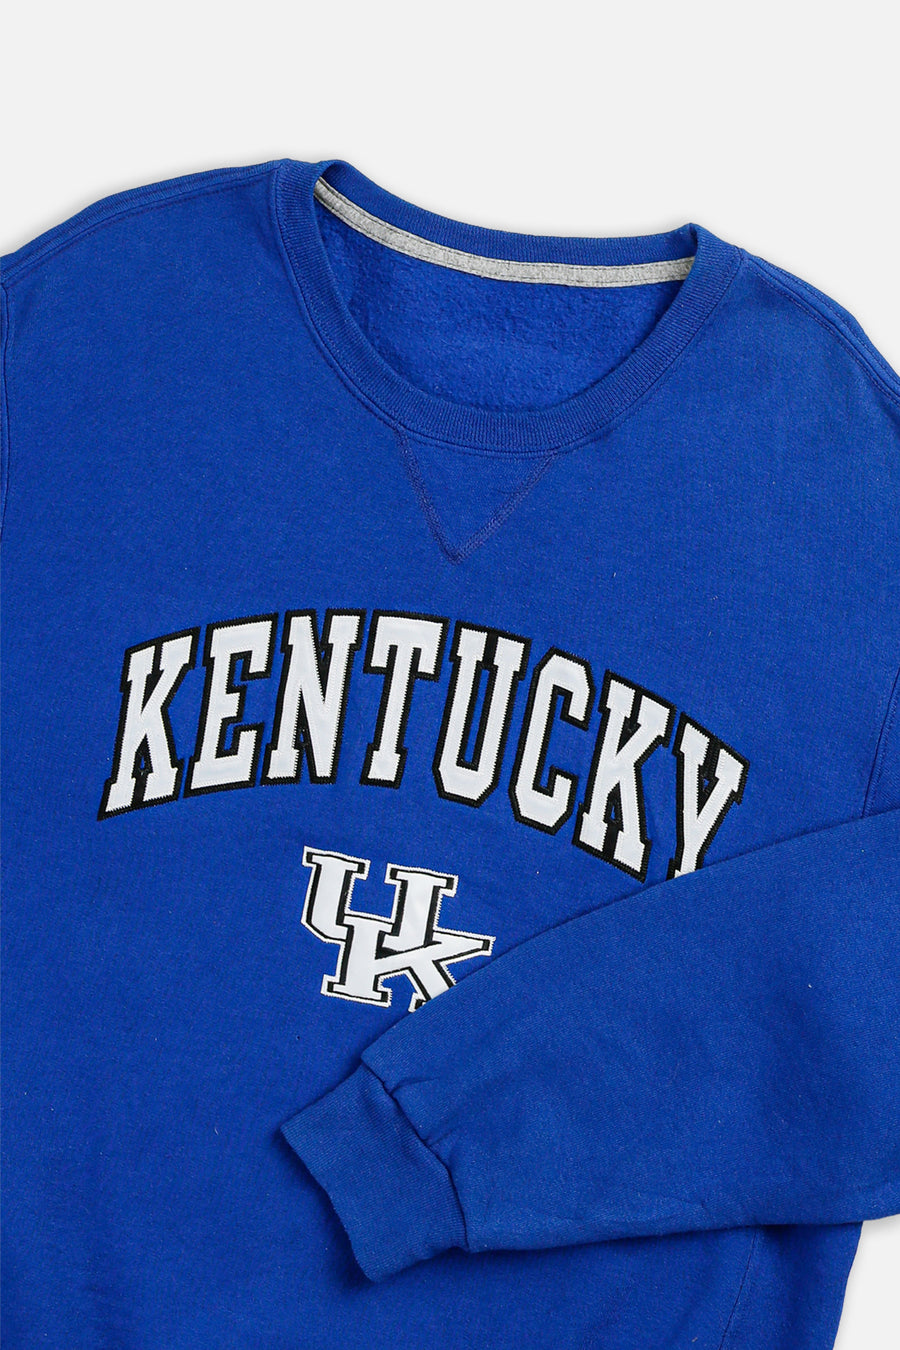 Vintage Kentucky Sweatshirt - M